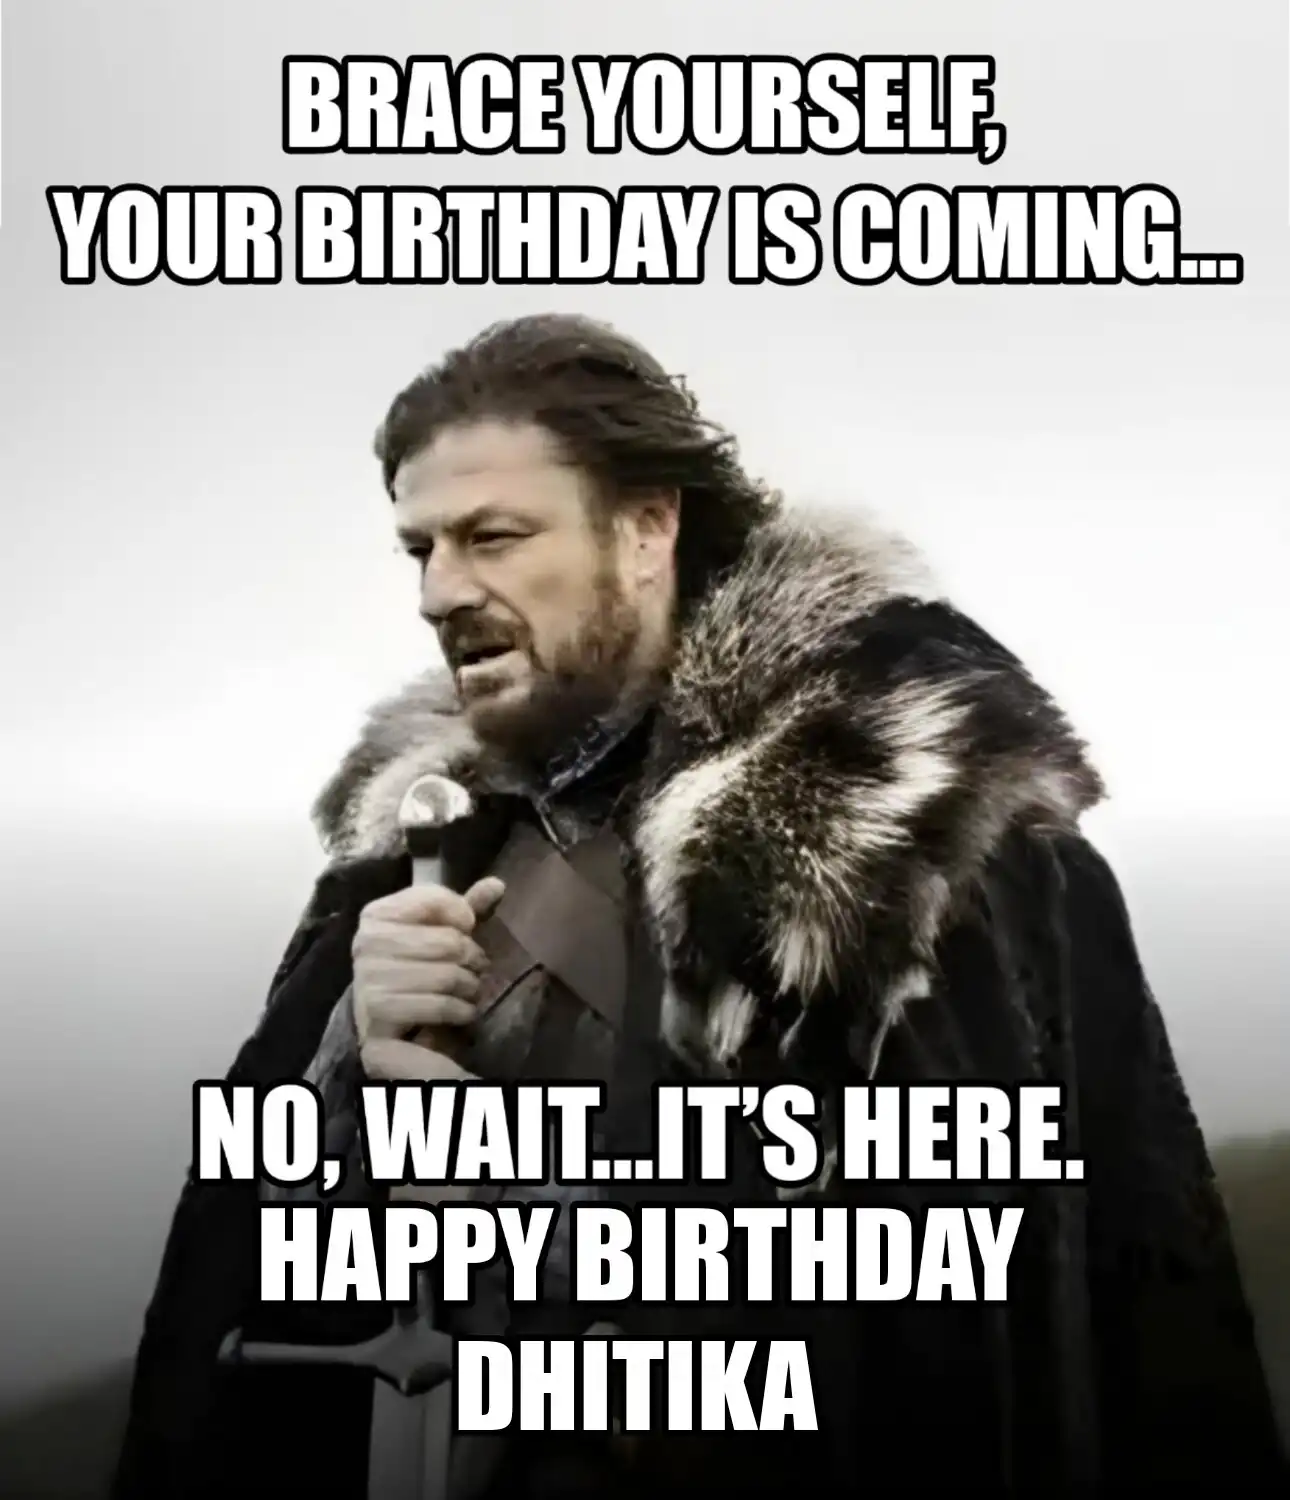 Happy Birthday Dhitika Brace Yourself Your Birthday Is Coming Meme